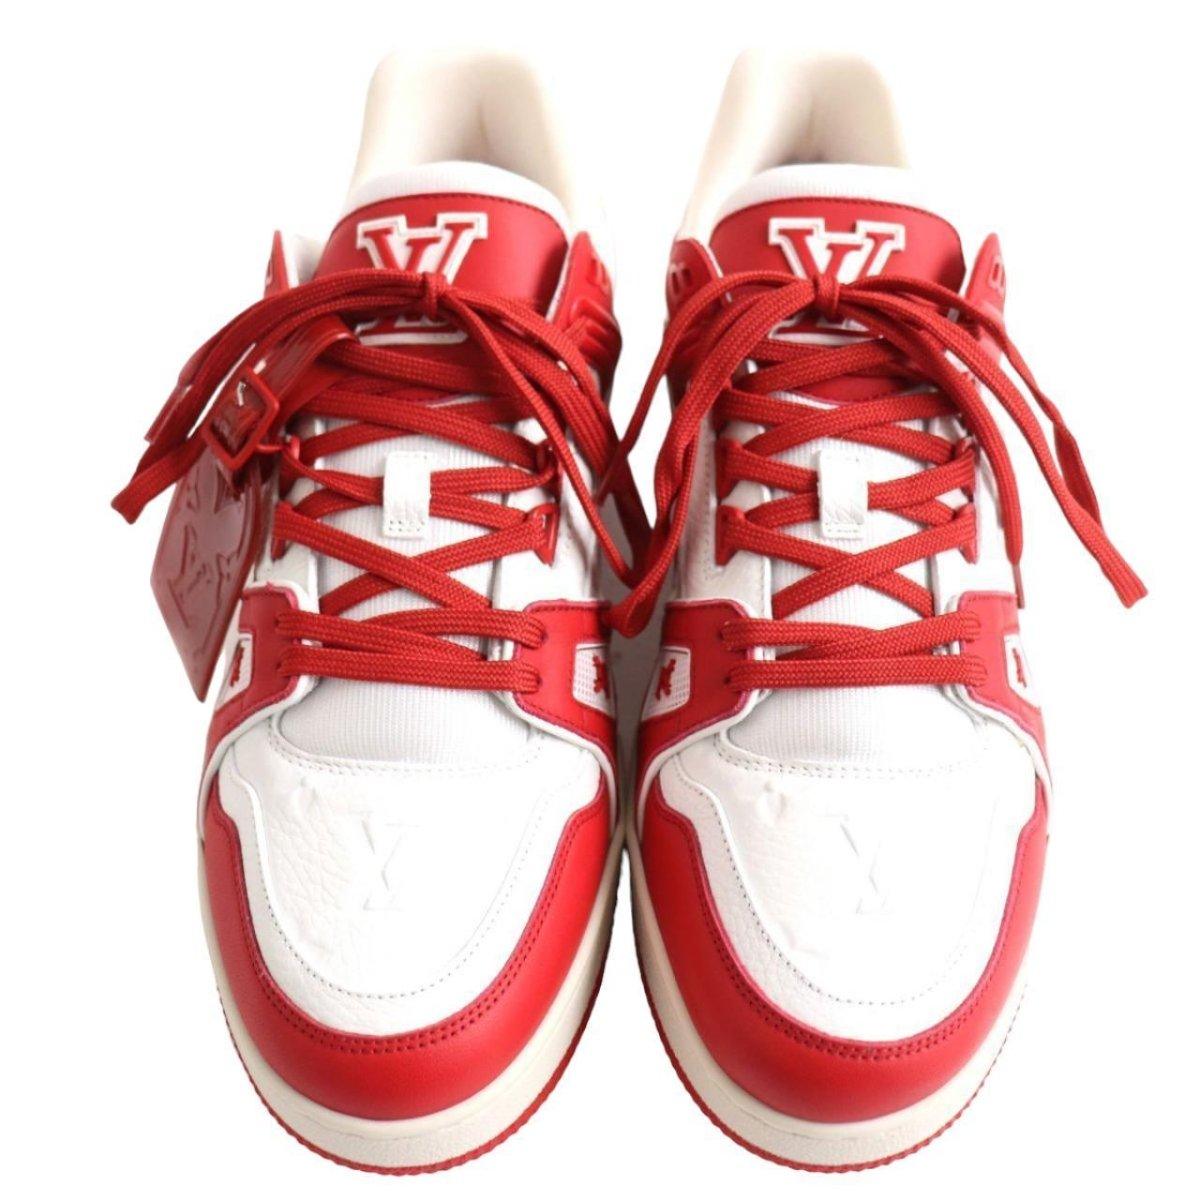 21SS Louis Vuitton LV x U2 Bono LV Shoe Product Red - Known Source